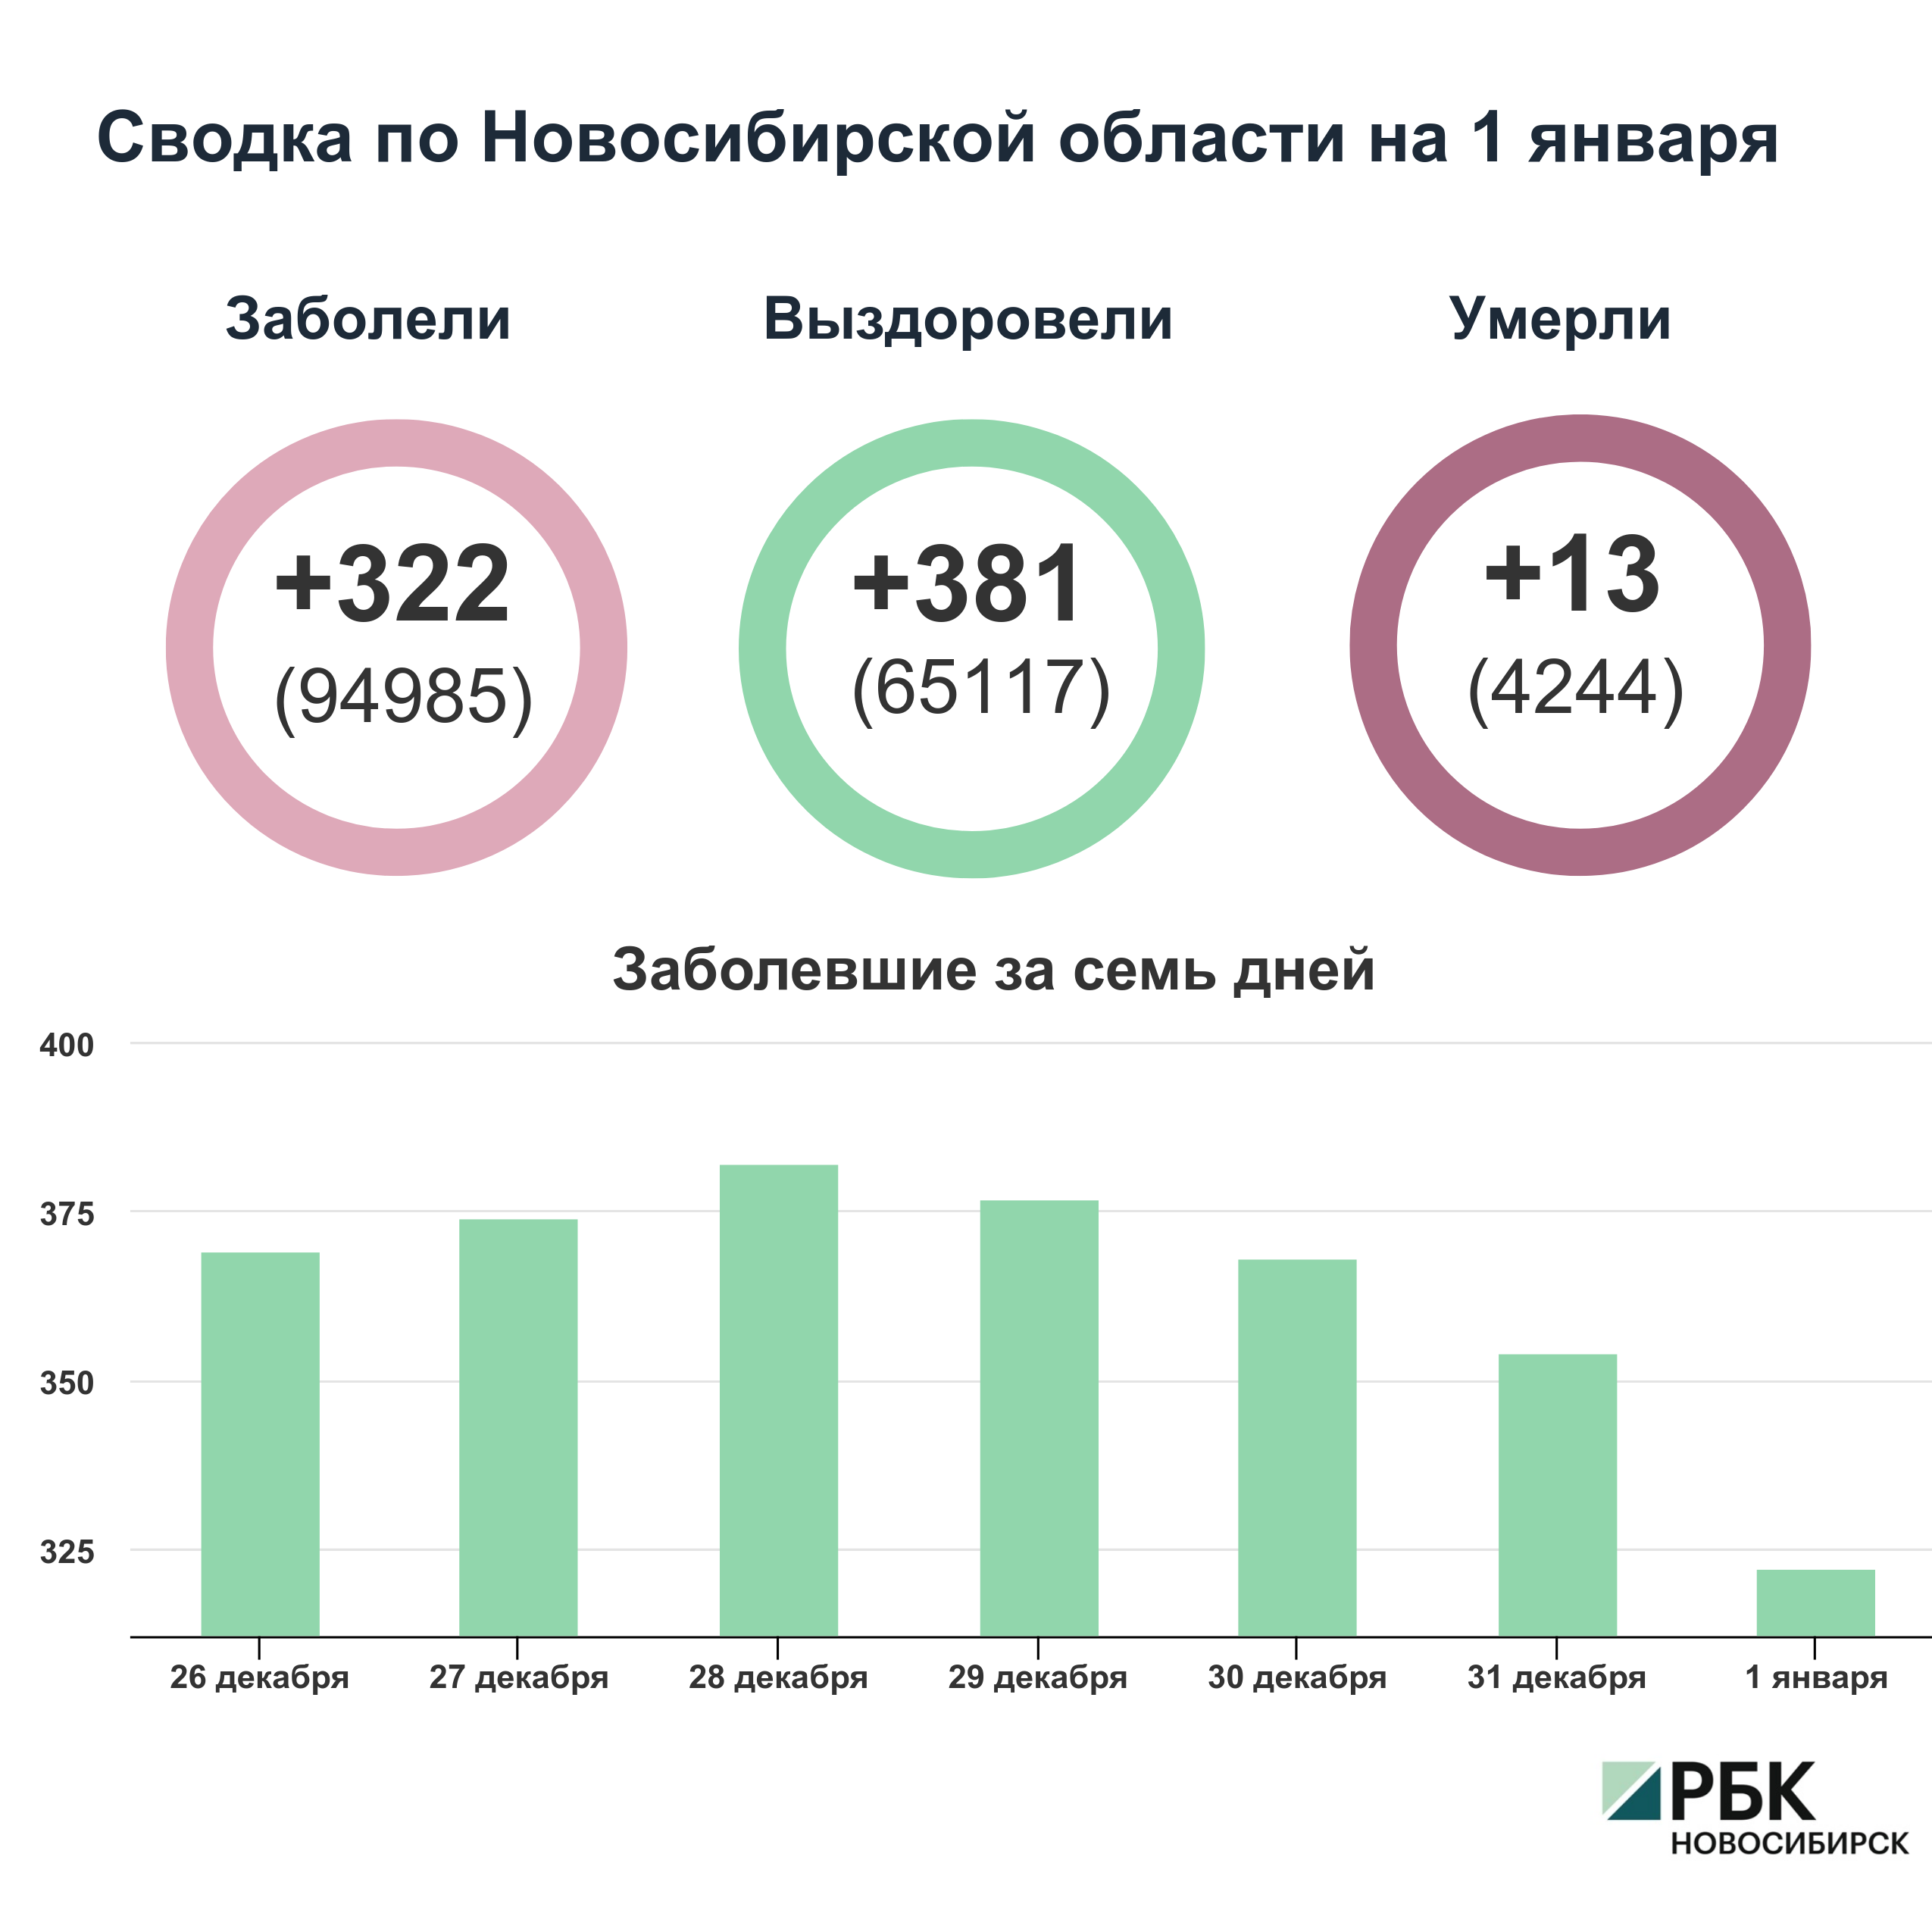 Коронавирус в Новосибирске: сводка на 1 января